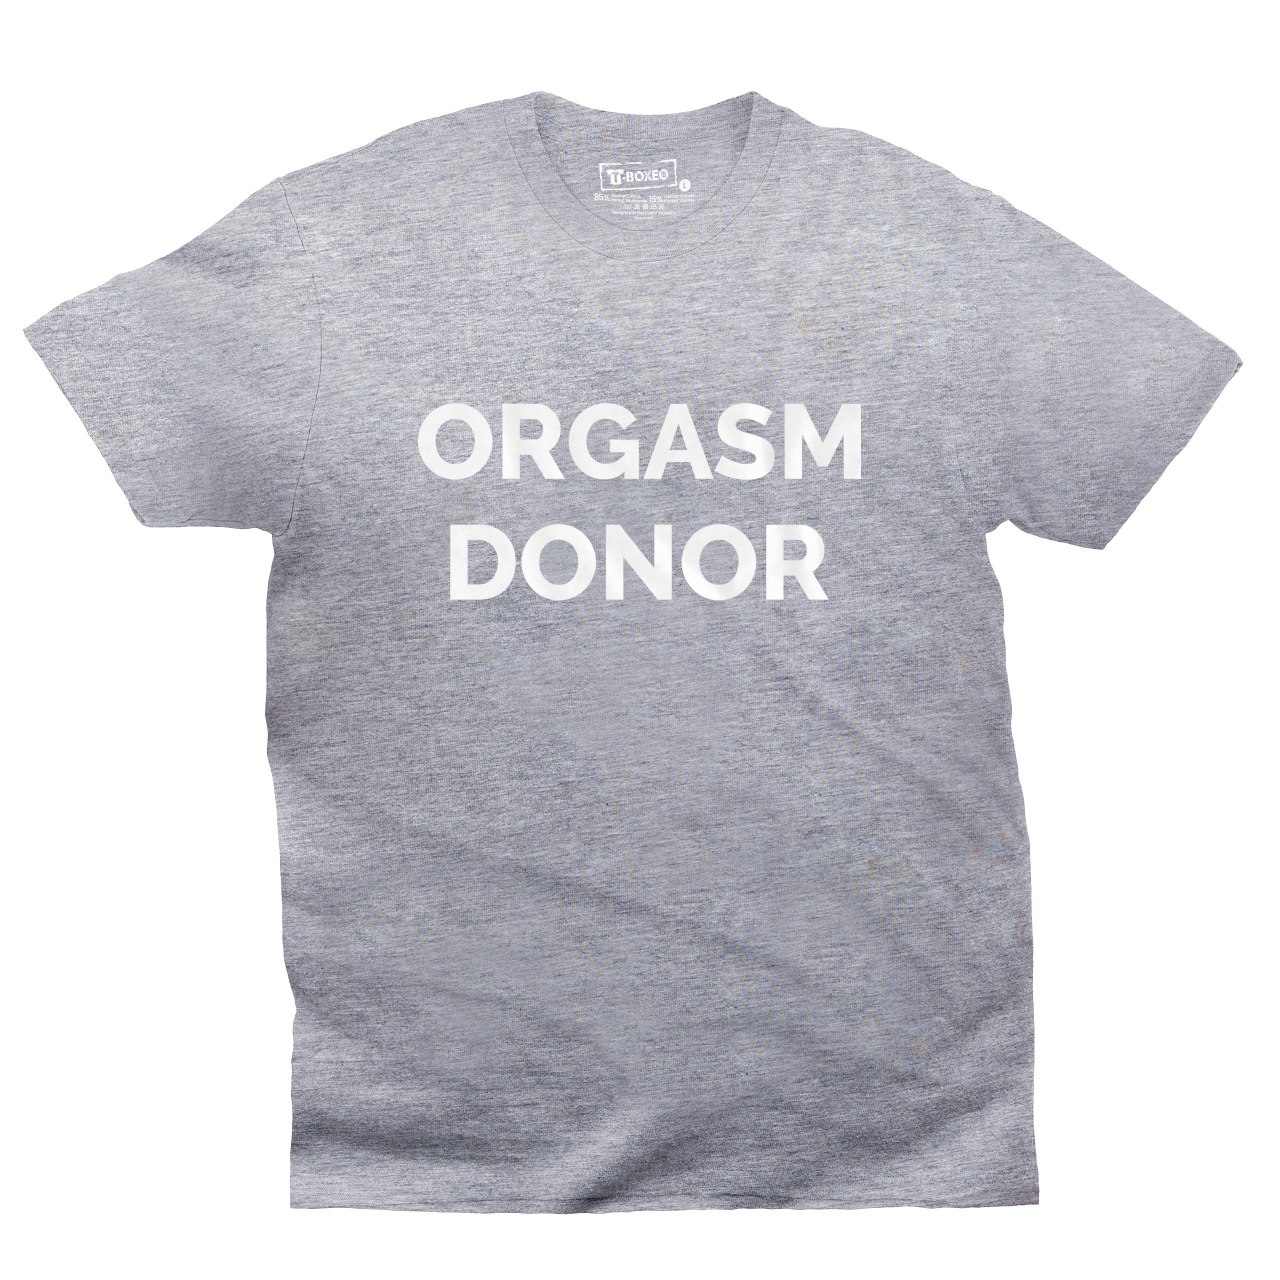 Pánské tričko s potiskem “Orgasm donor”